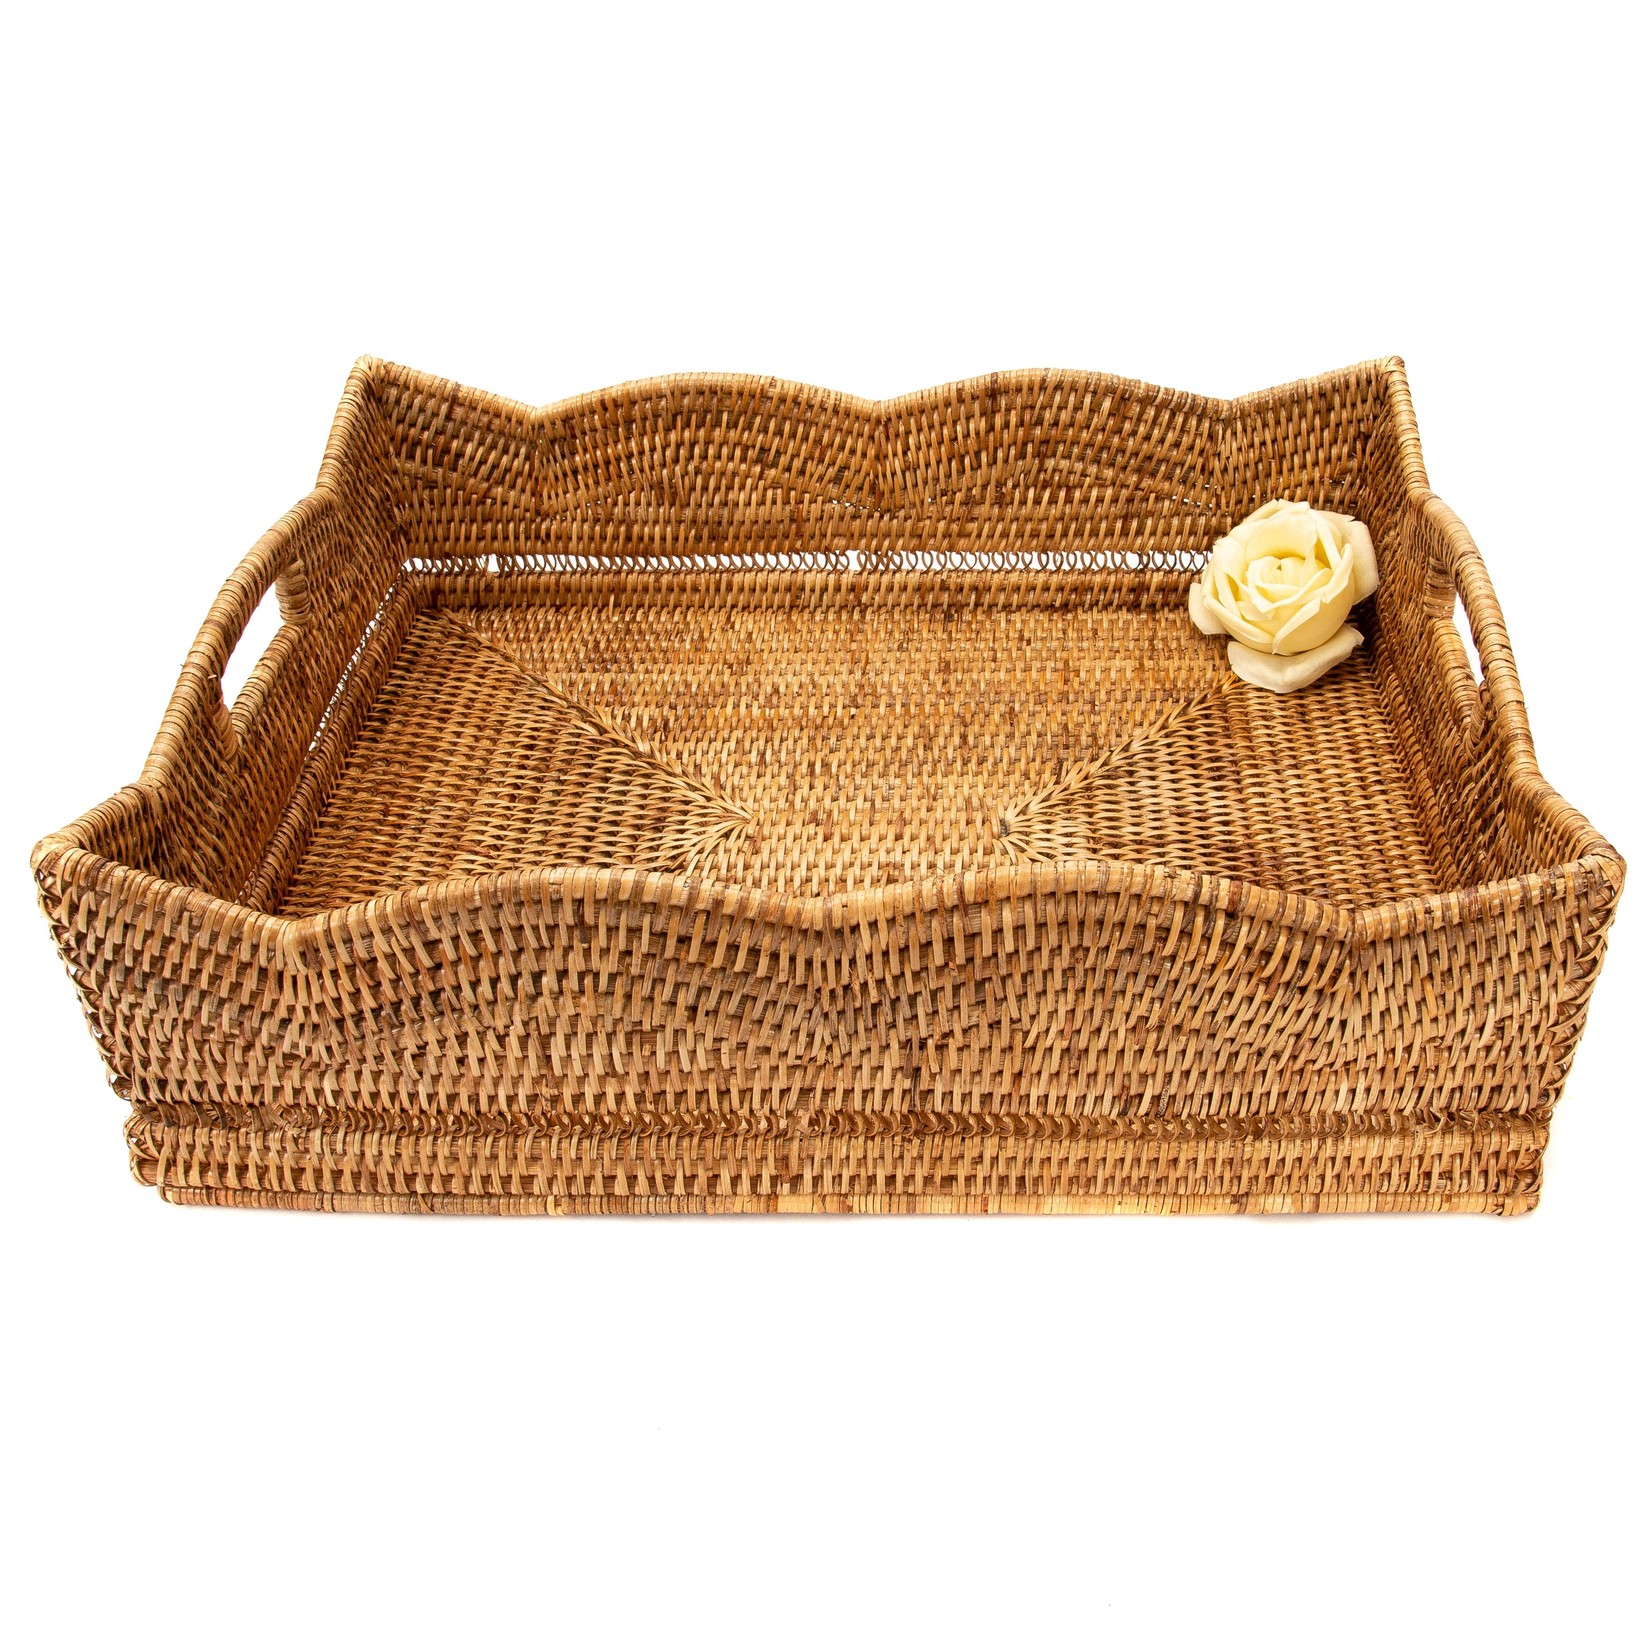 Artifacts Trading Company Rattan Rectangular Baskets